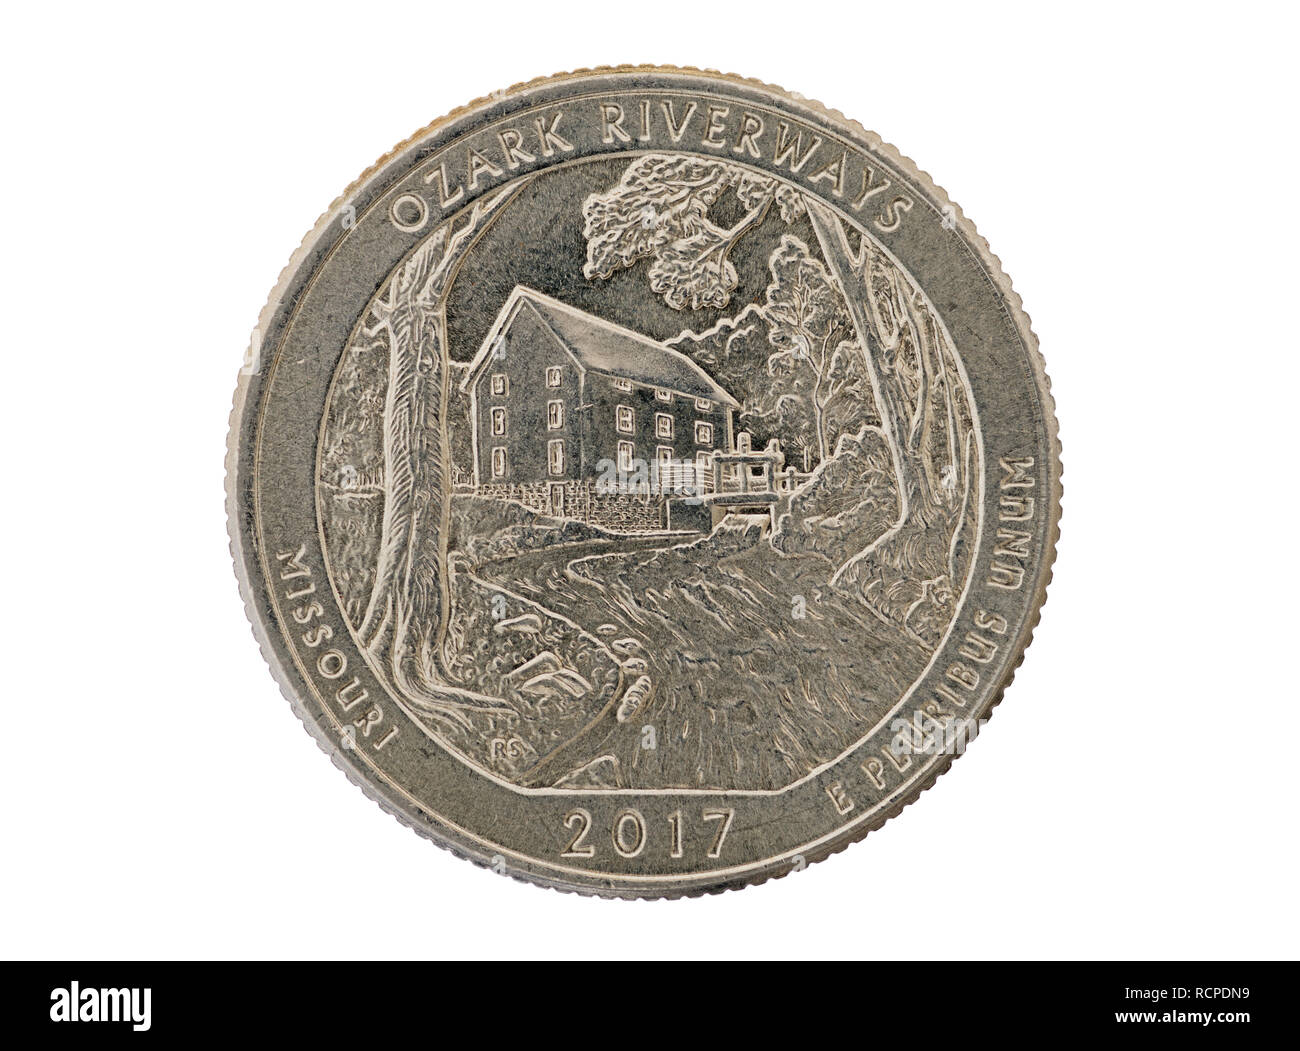 Ozark Riverways Missouri commemorative quarter coin isolated on white background Stock Photo